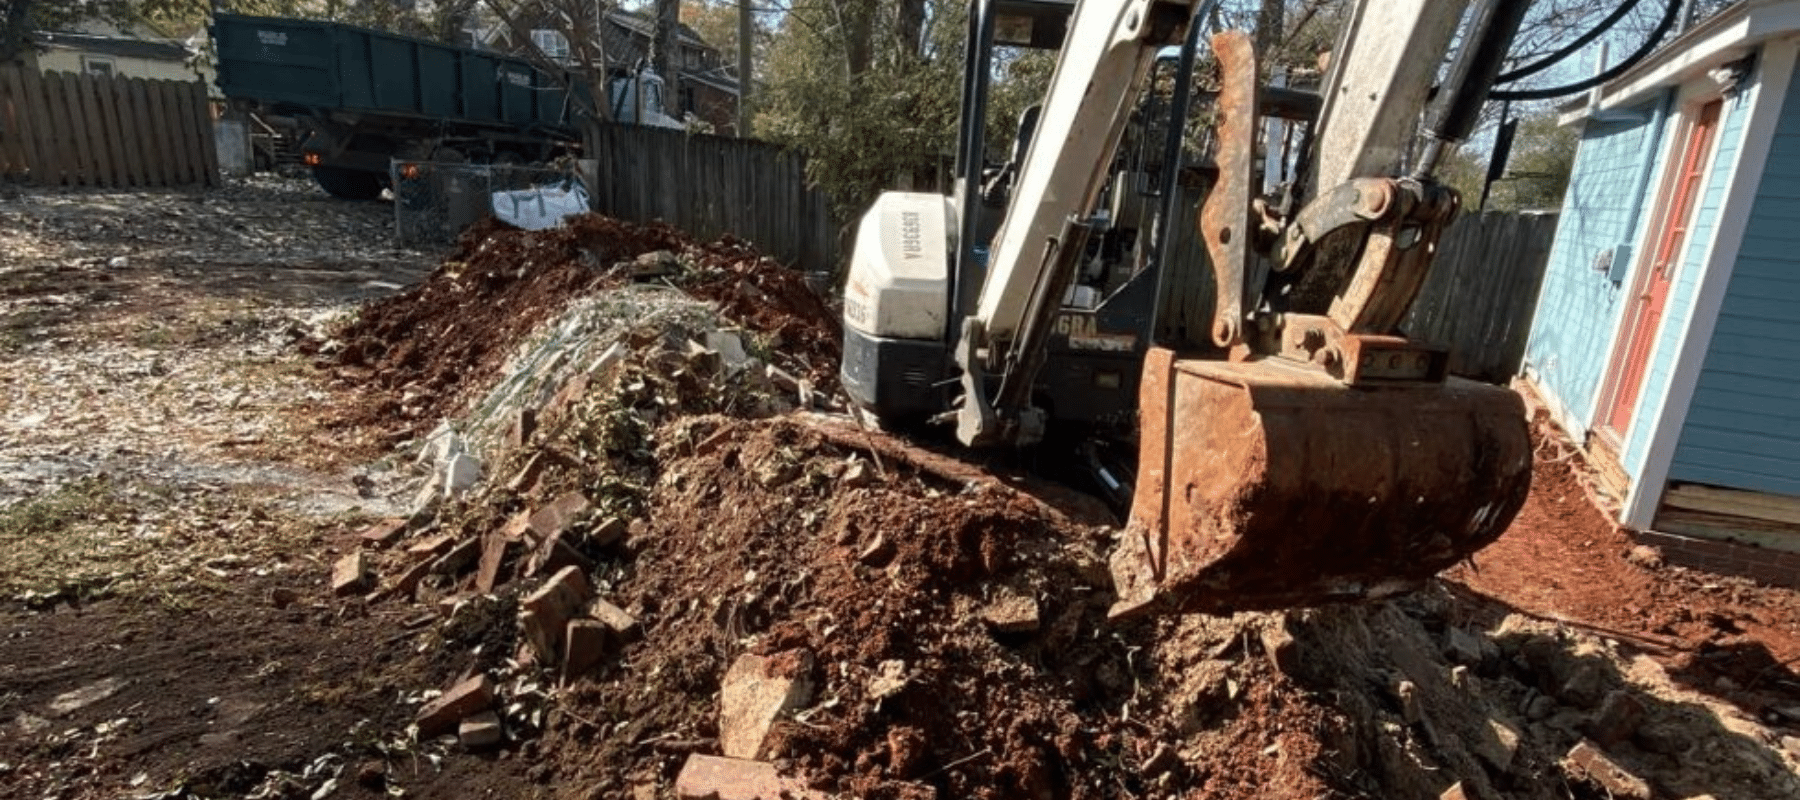 A bulldozer digging through a pile of dirt